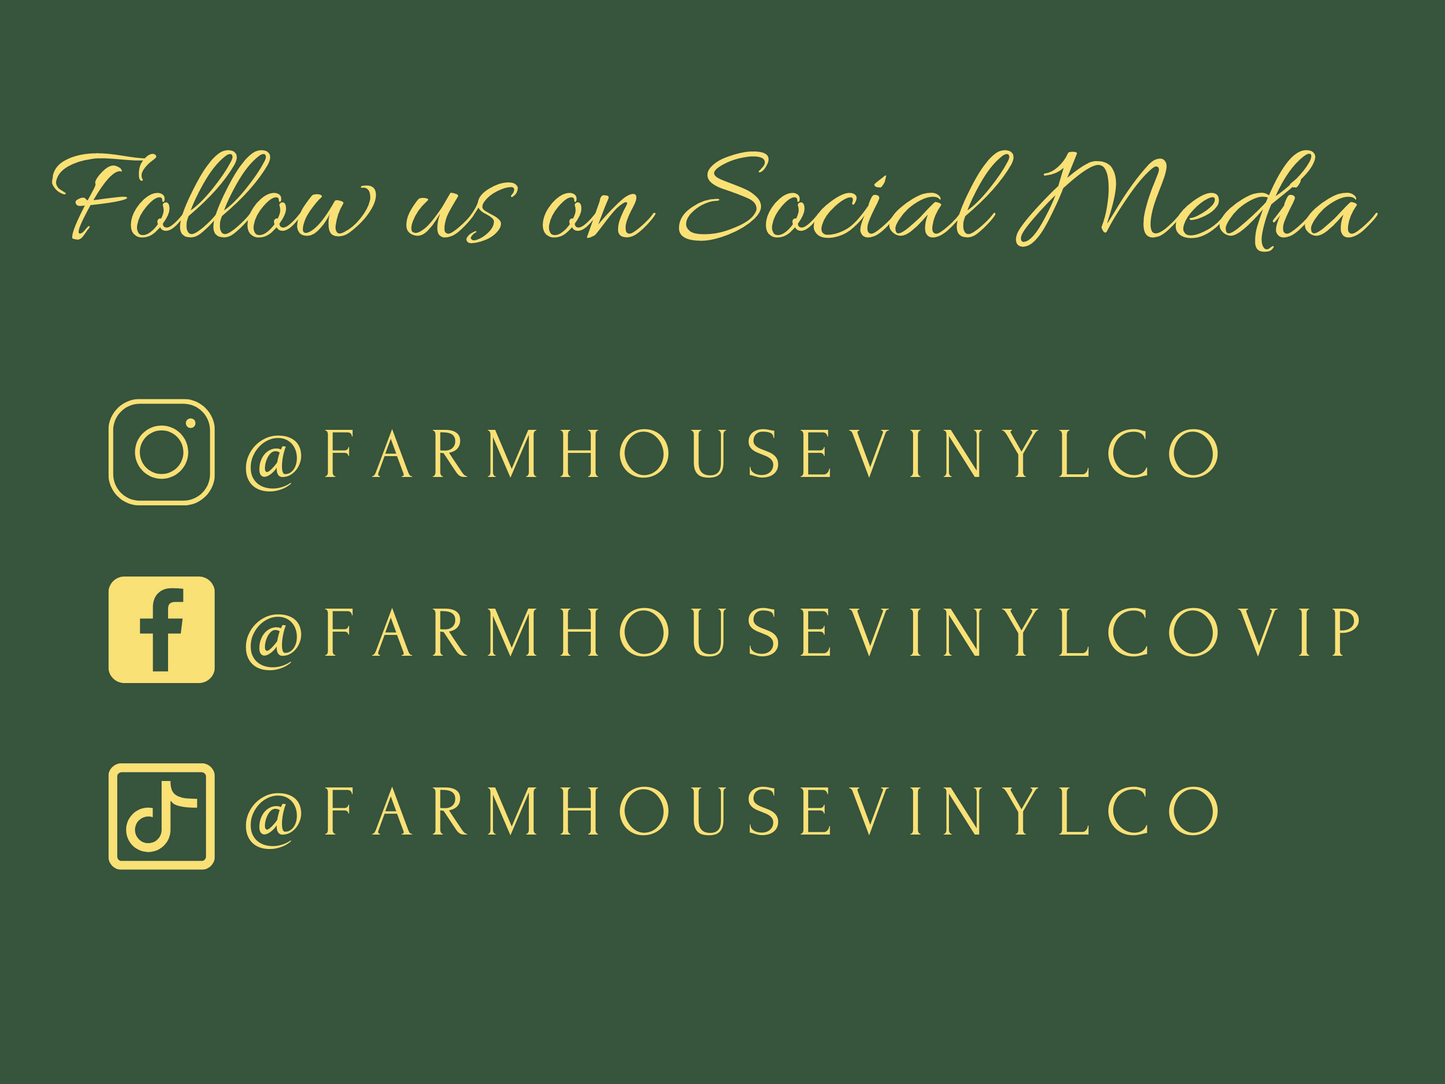 Sweet Farmhouse or Bless Our Nest Towels - Farmhouse Vinyl Co